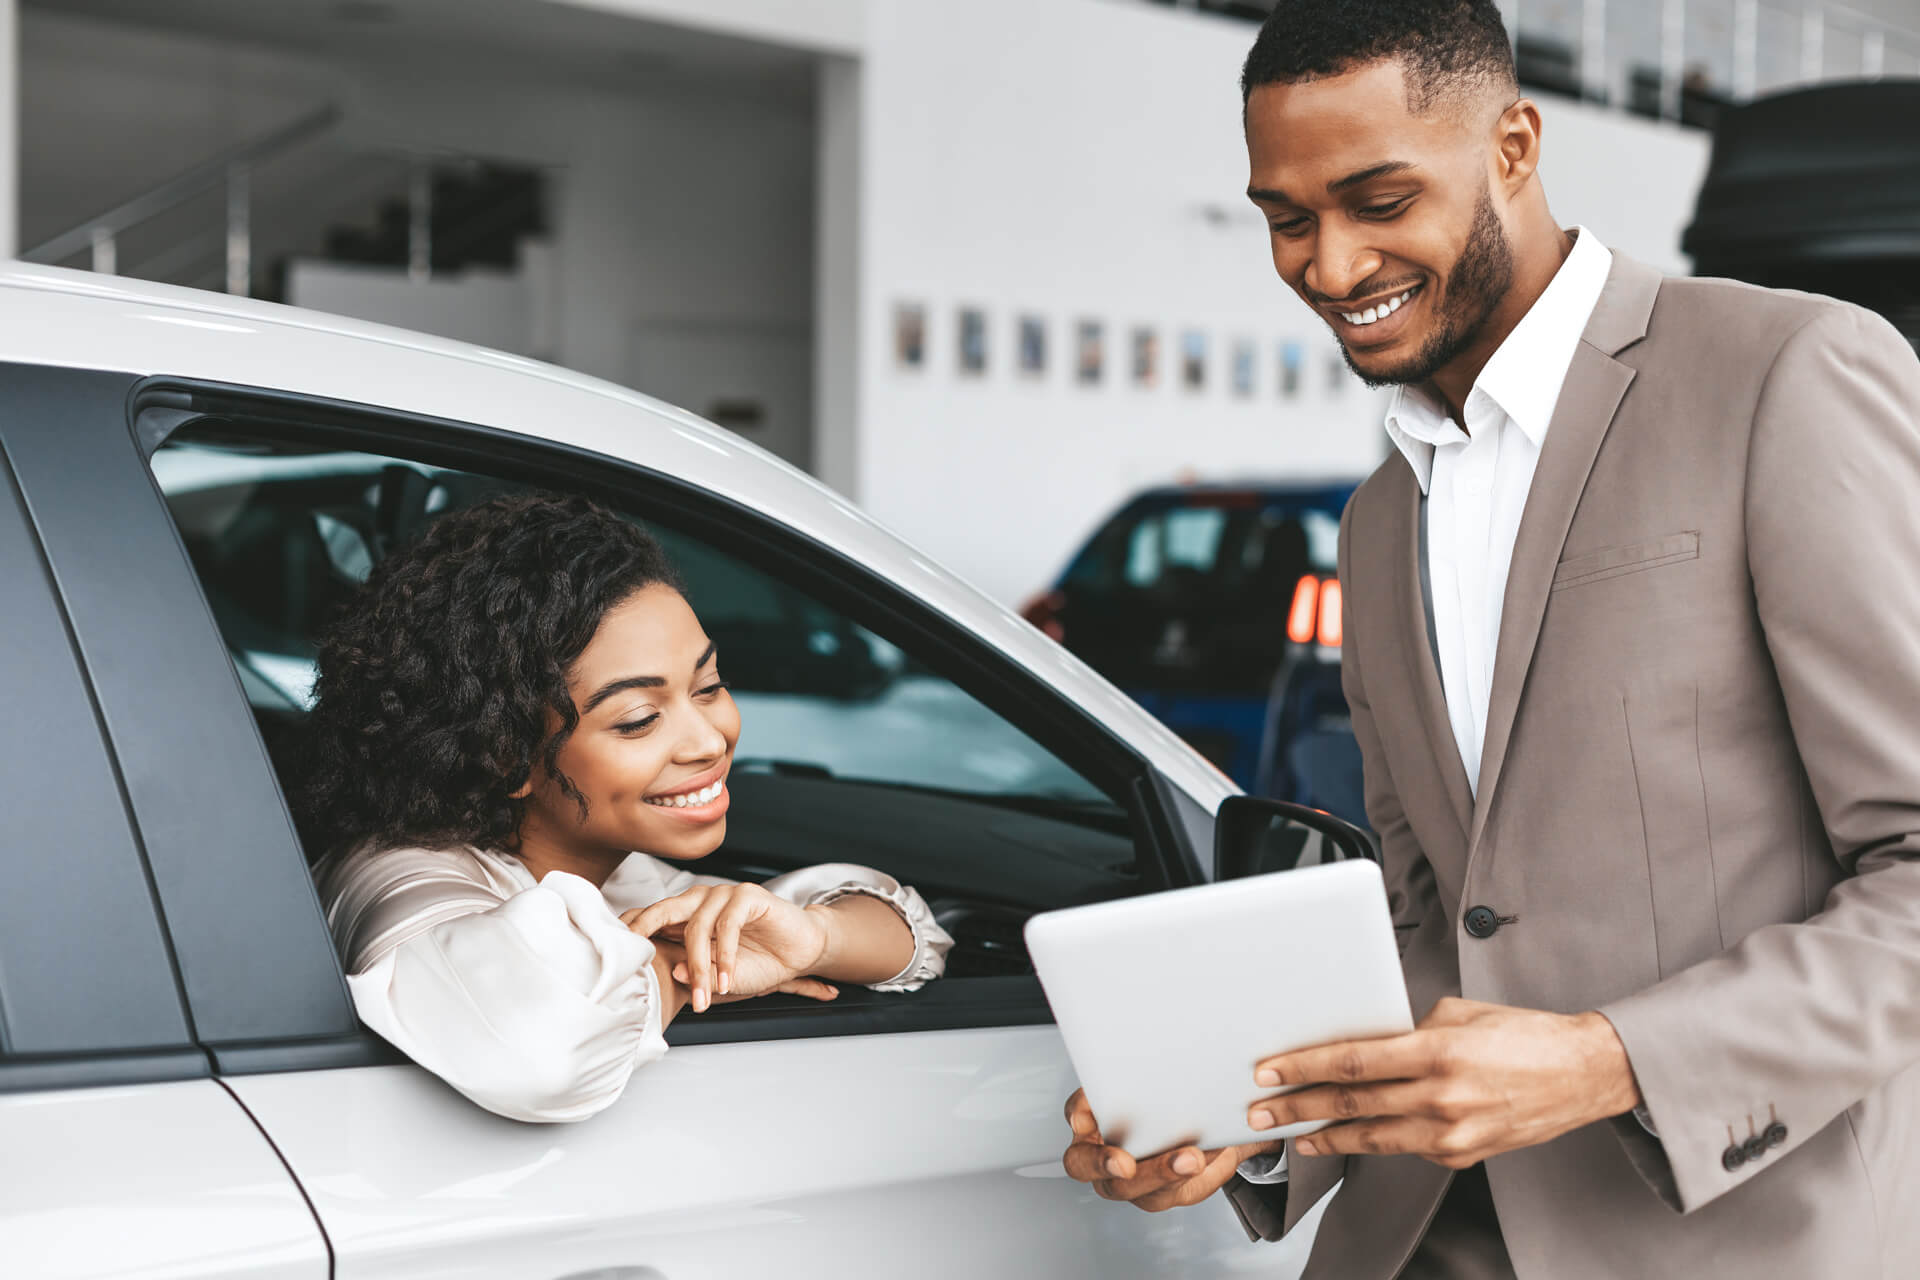 Carta de crédito Magalu para comprar carros: conheça mais sobre o consórcio